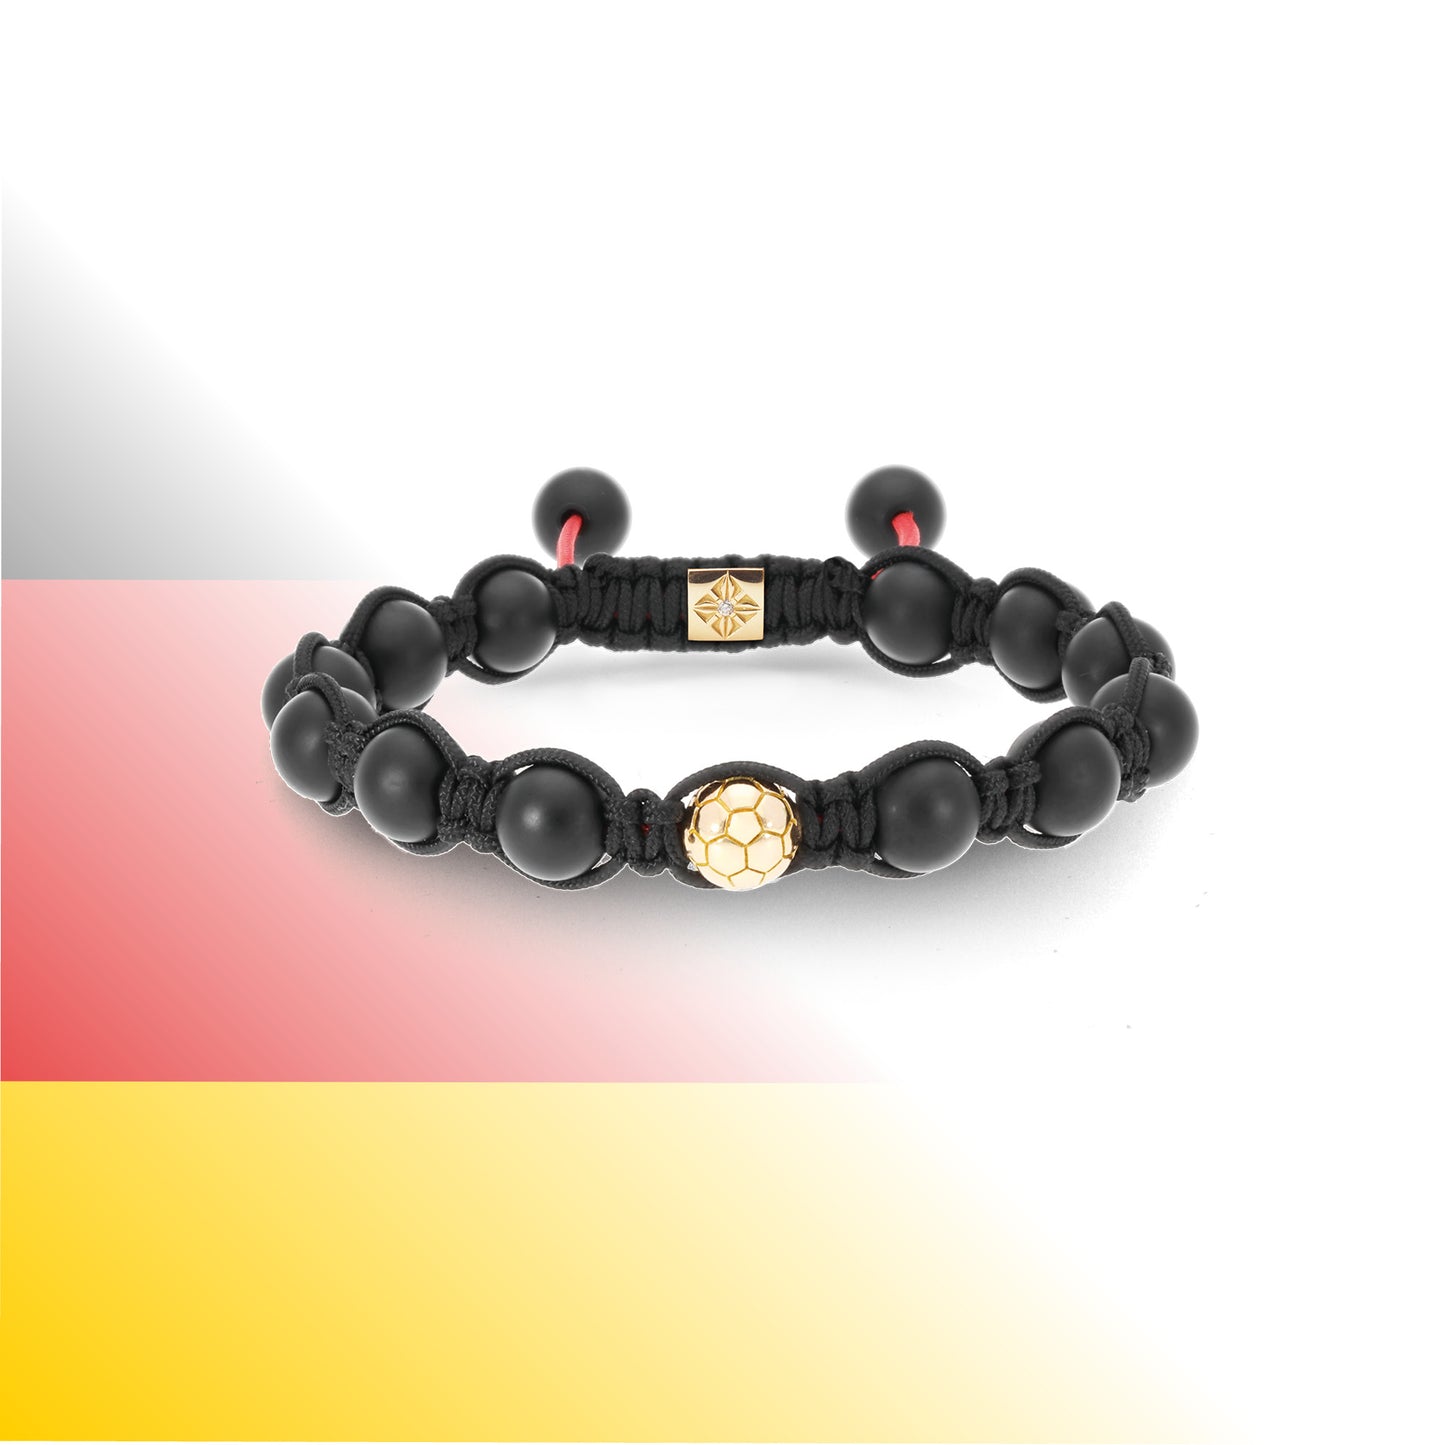 "Germany" - Braided Bracelet